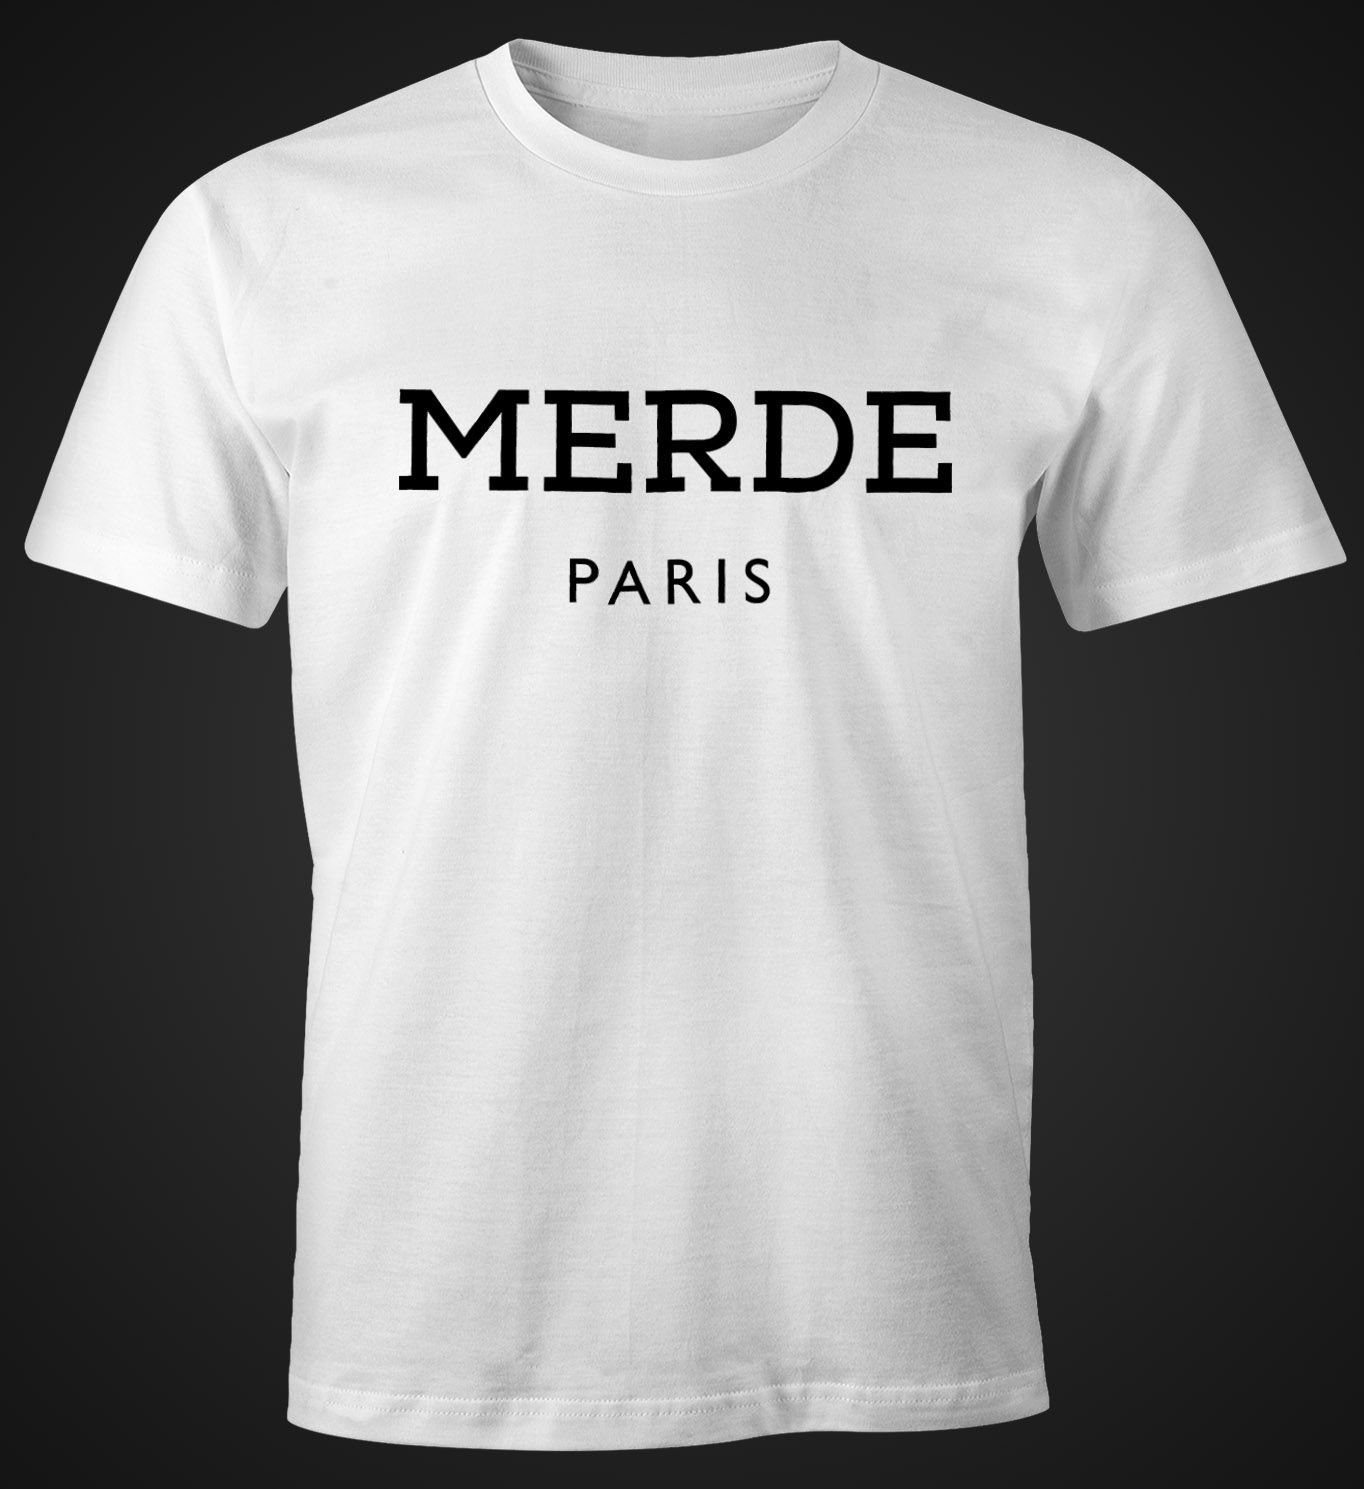 T-Shirt mit Fun-Shirt Herren Paris Moonworks® Print weiß Print-Shirt MoonWorks Merde